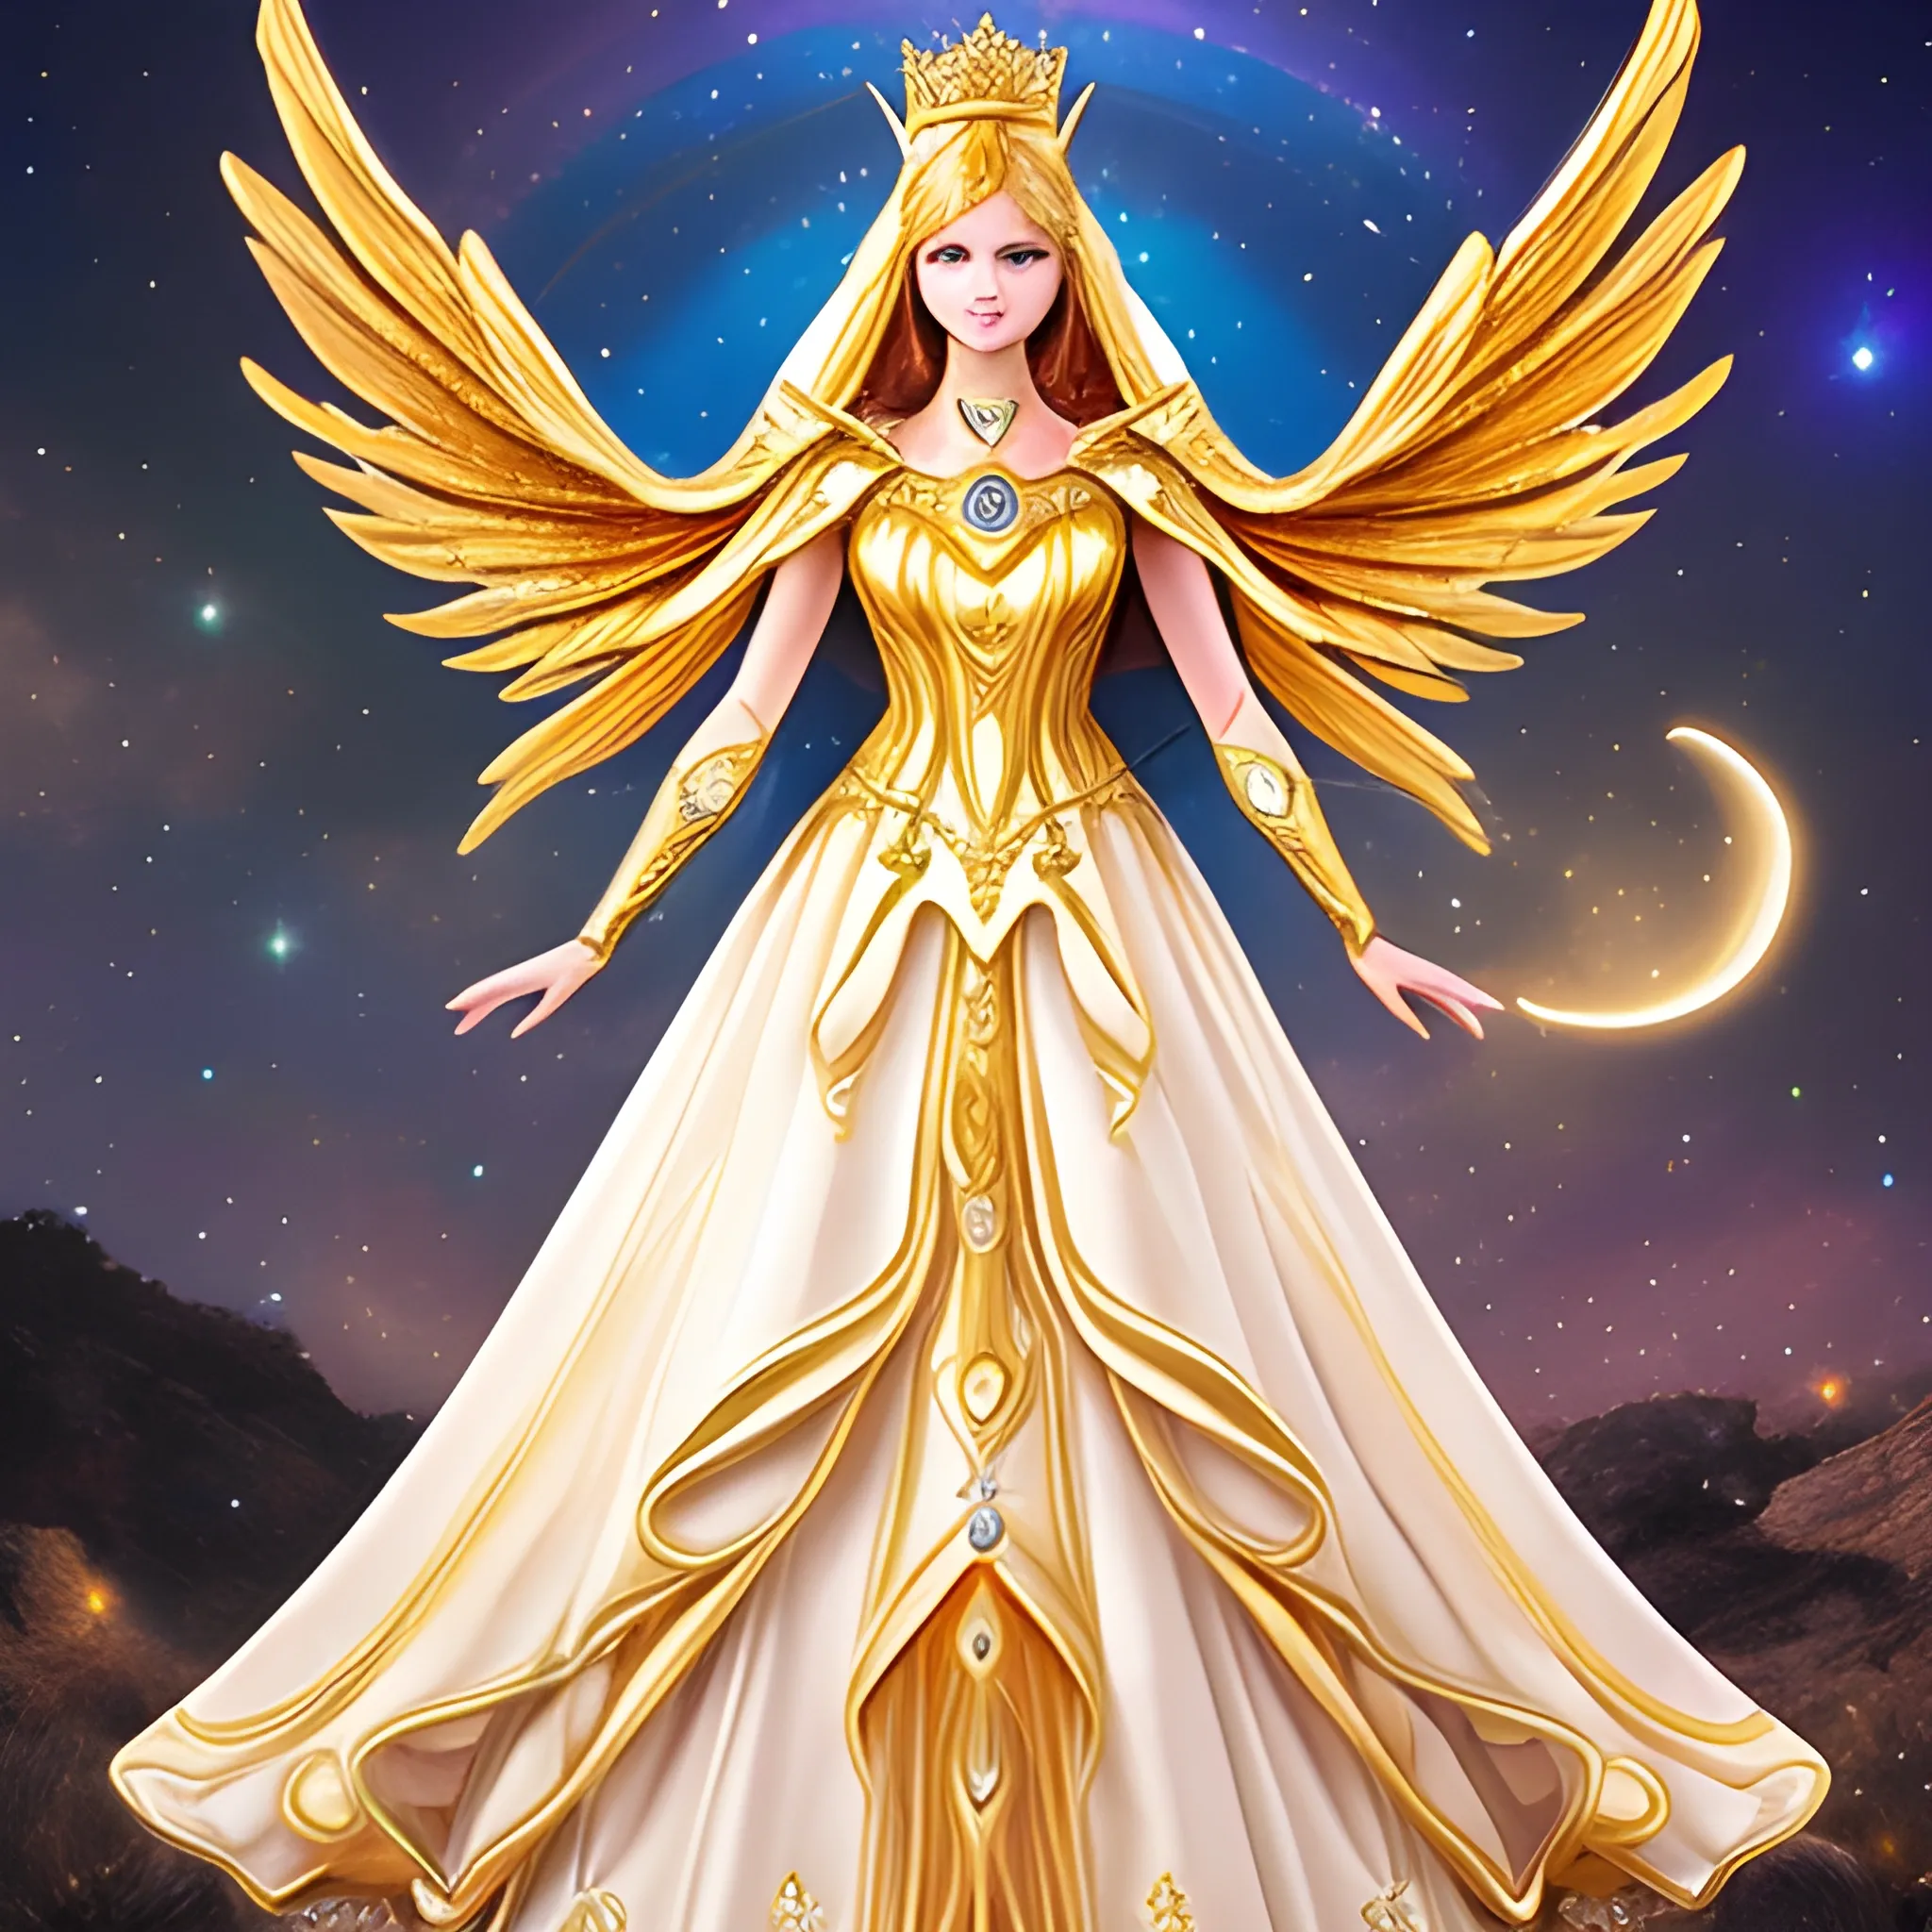 Golden galaxy goddess Angel fairy Queen princess dream wedding dress with cape and high collar warrior moon goddess armor majestic supreme powerful